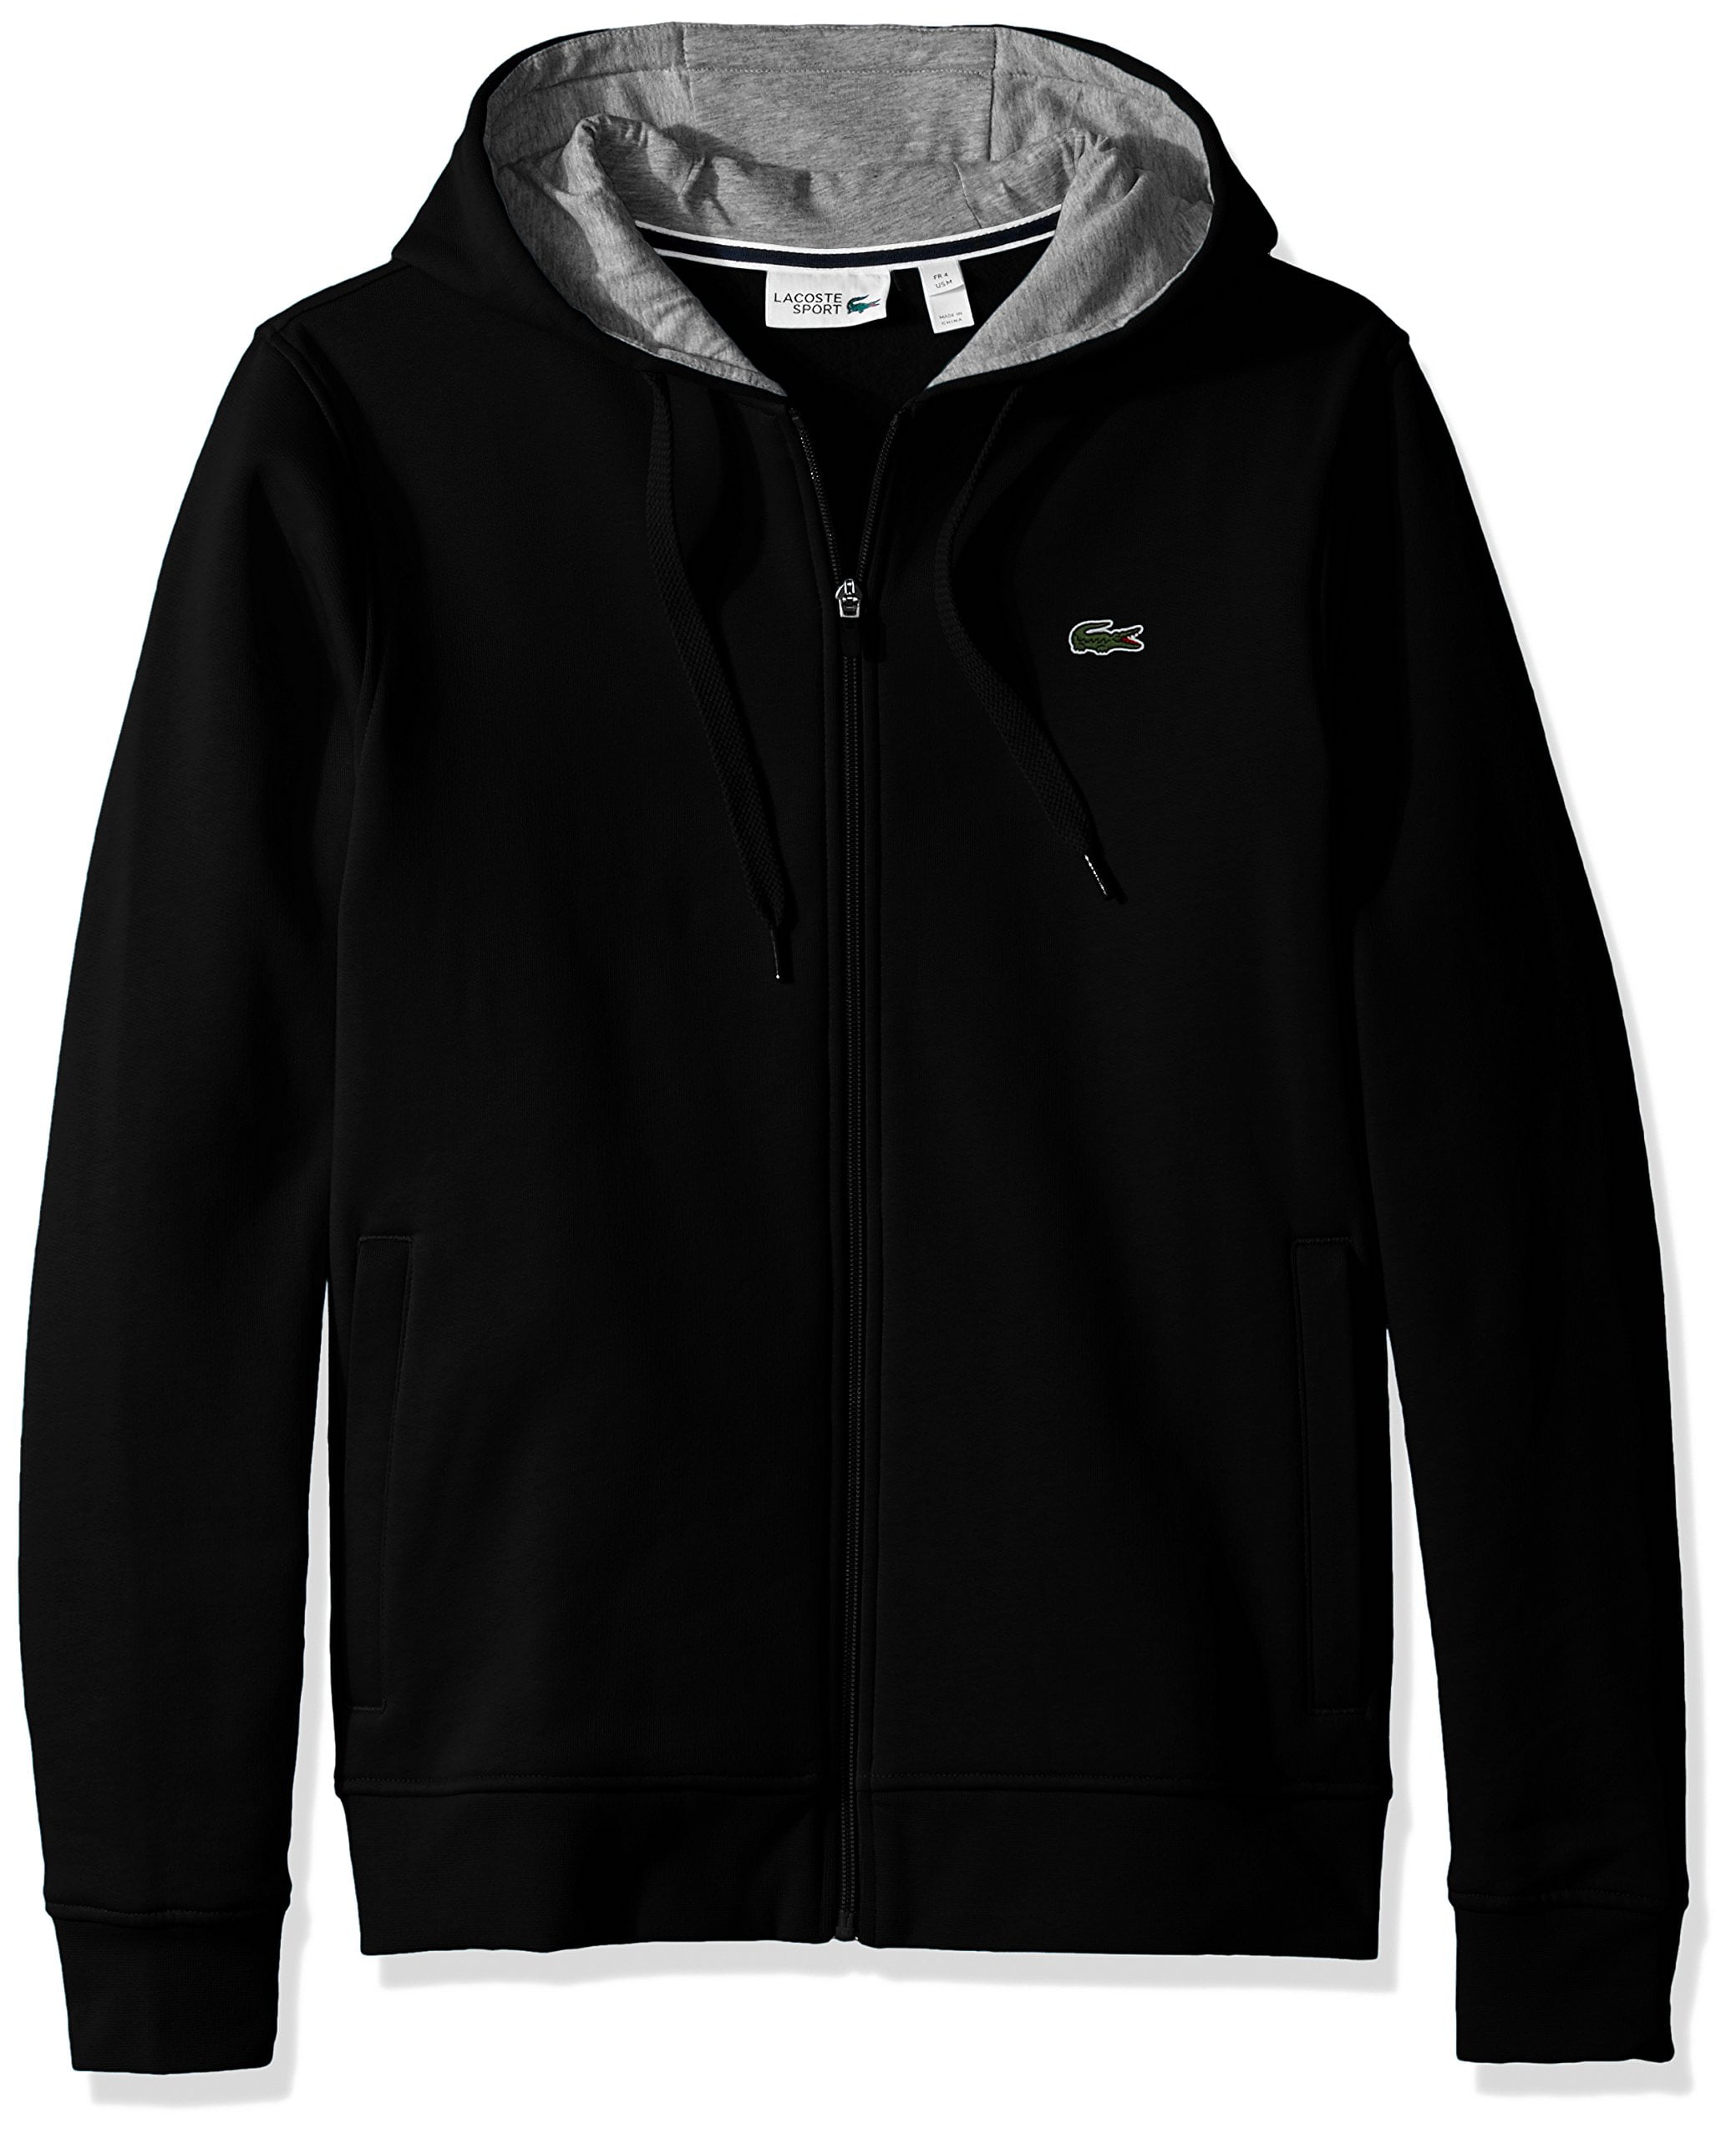 Lacoste mens Sport Full Zip Light Weight Hooded Tennis Jacket